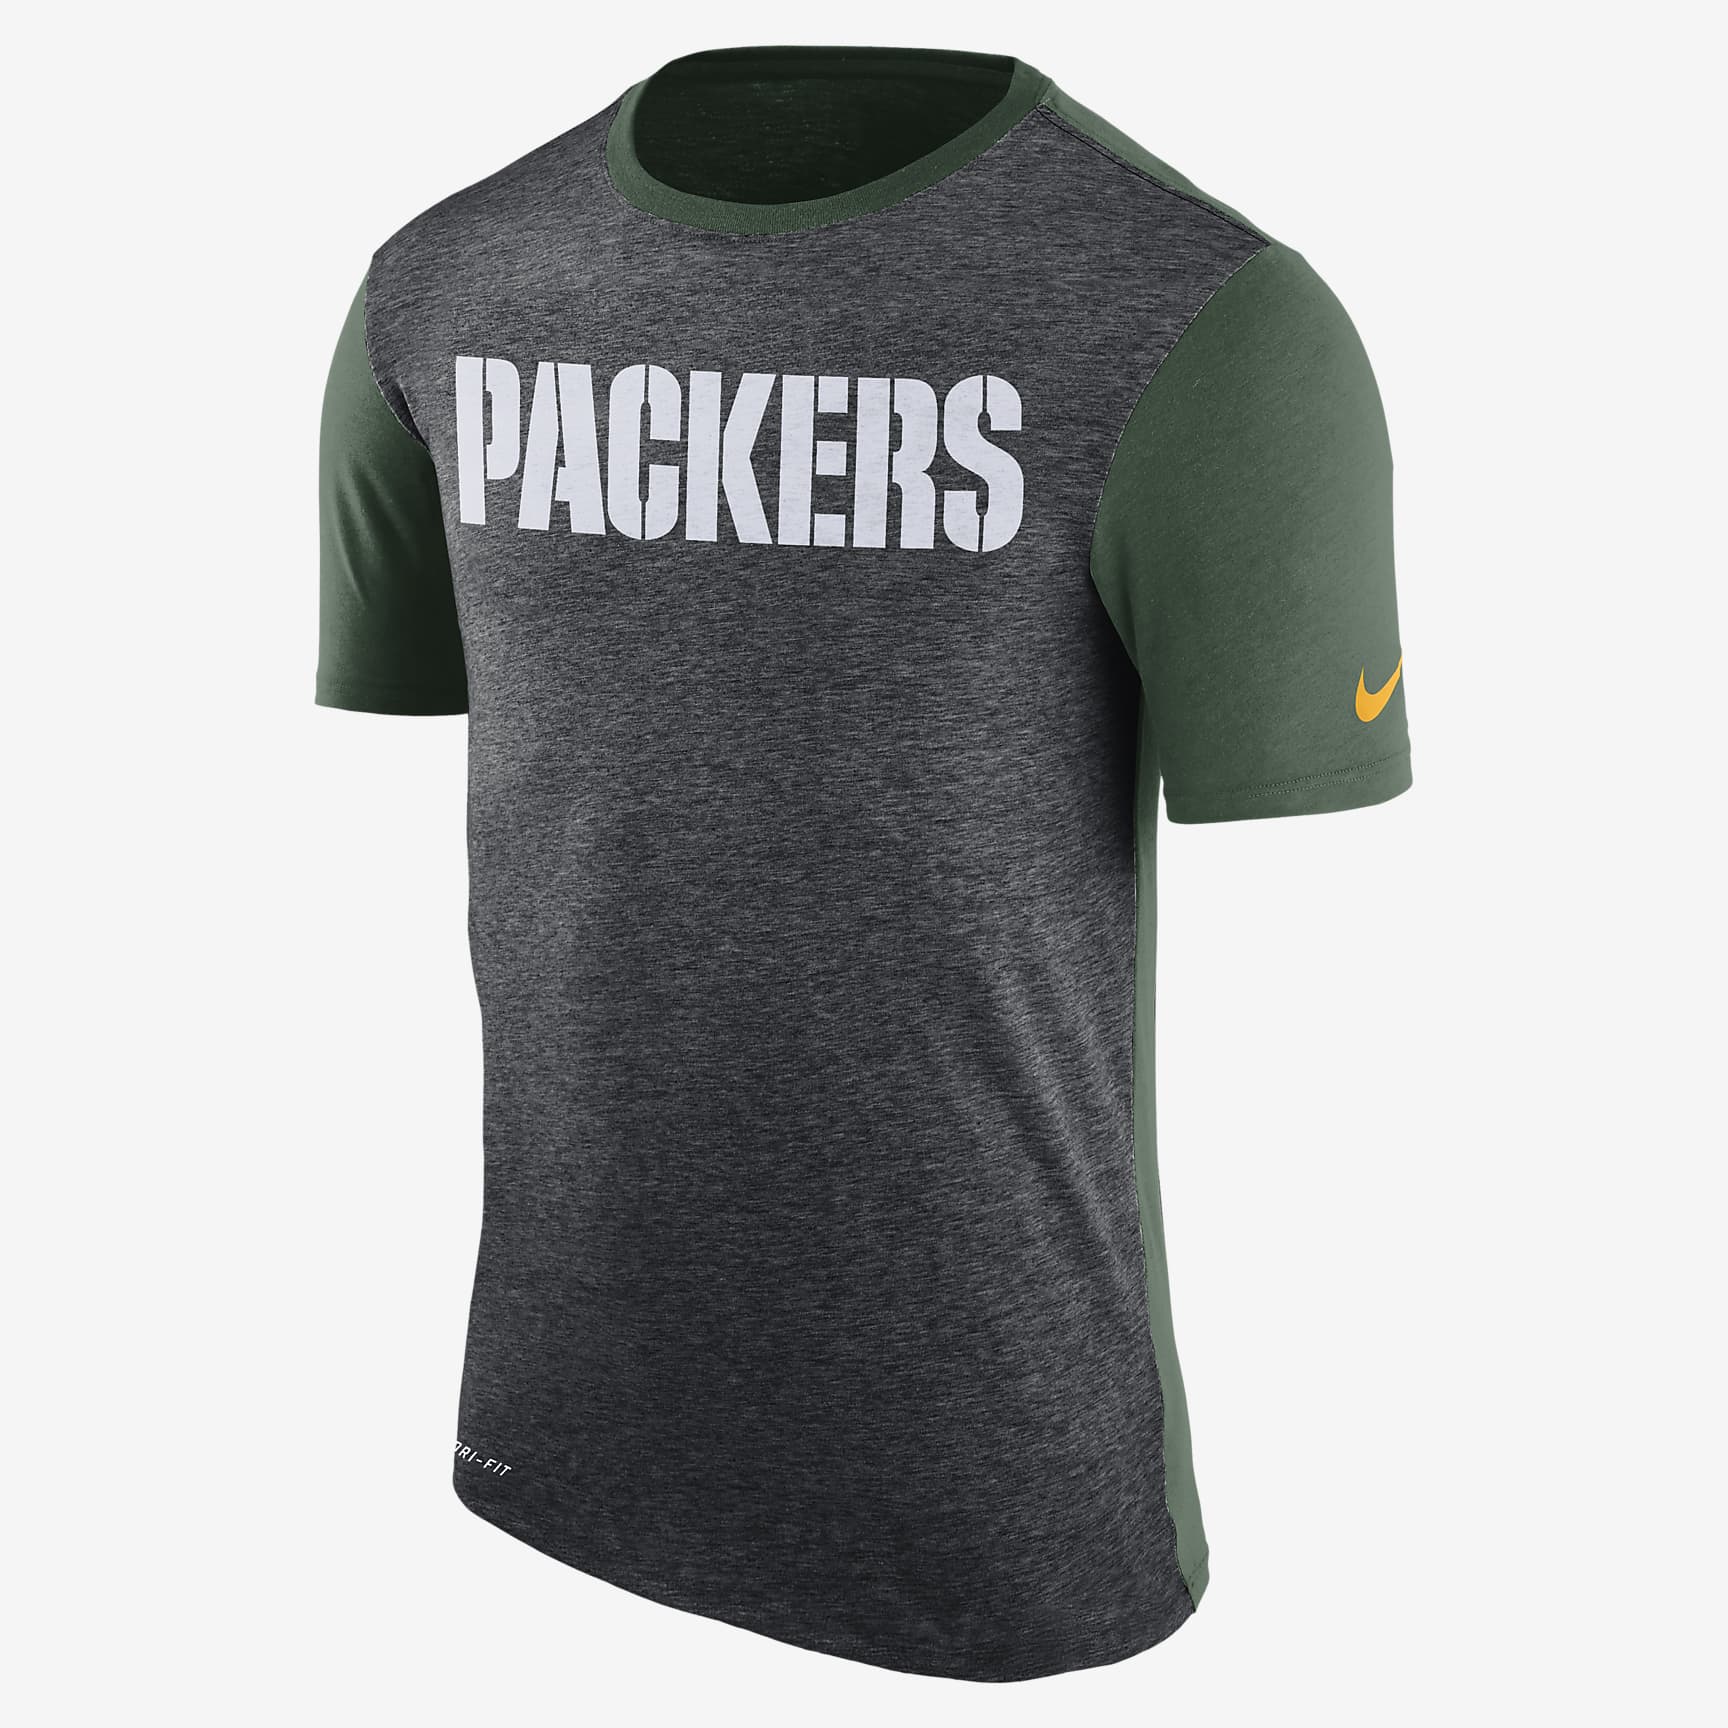 Nike Dry Color Dip (NFL Packers) Men's T-Shirt. Nike NL